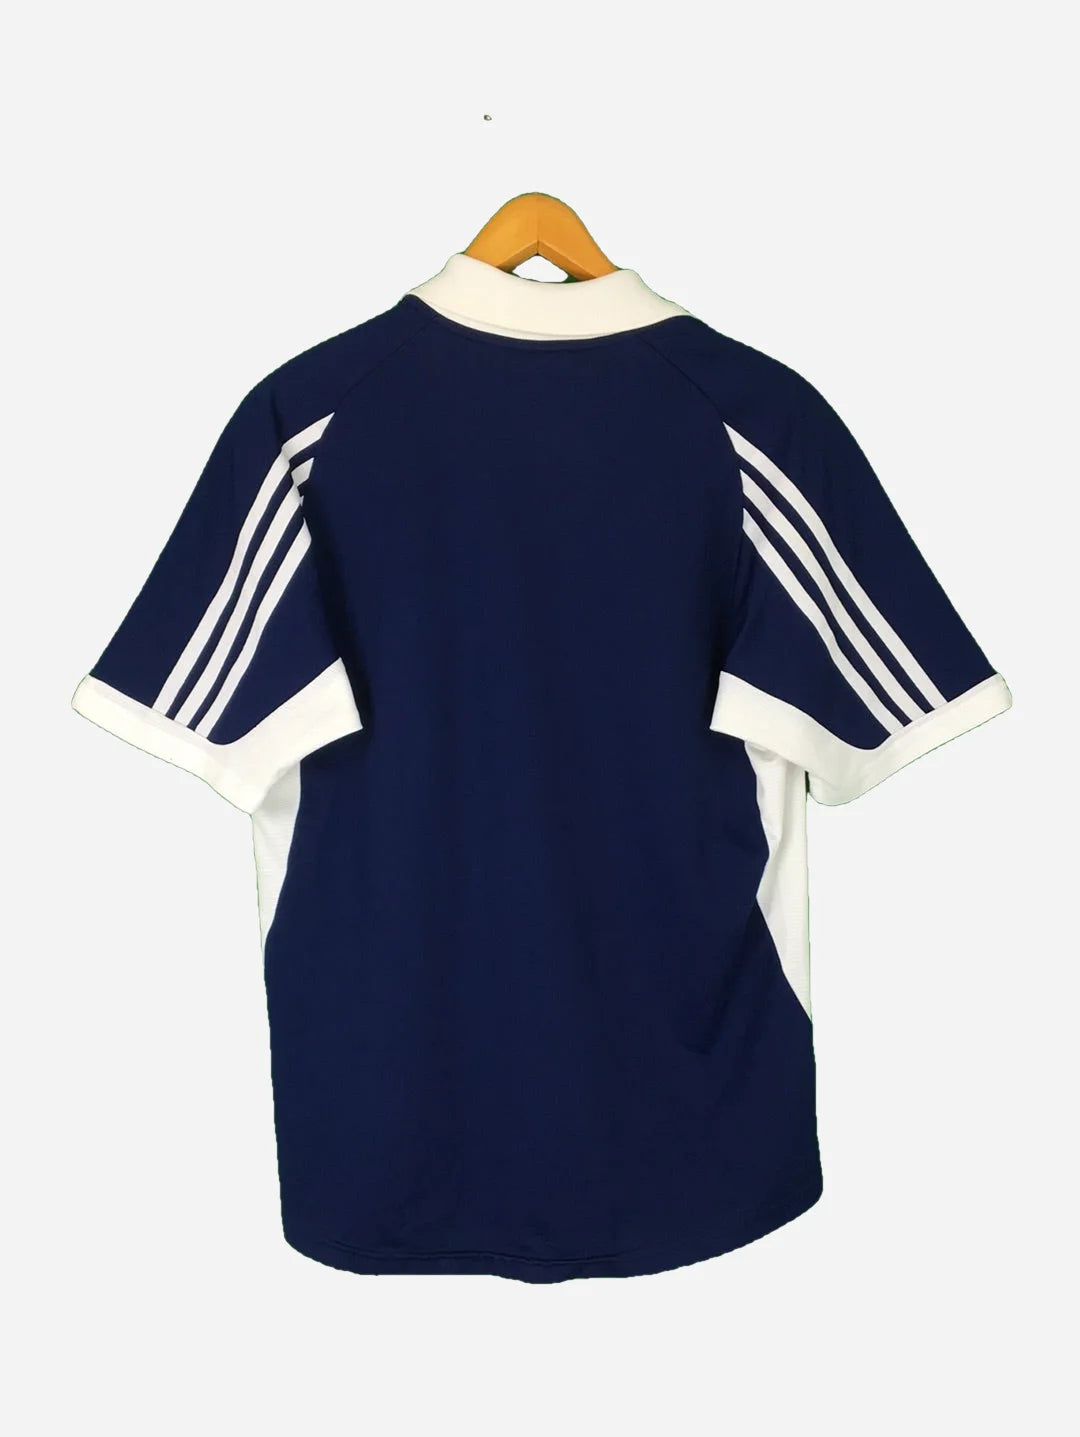 Adidas jersey (M)